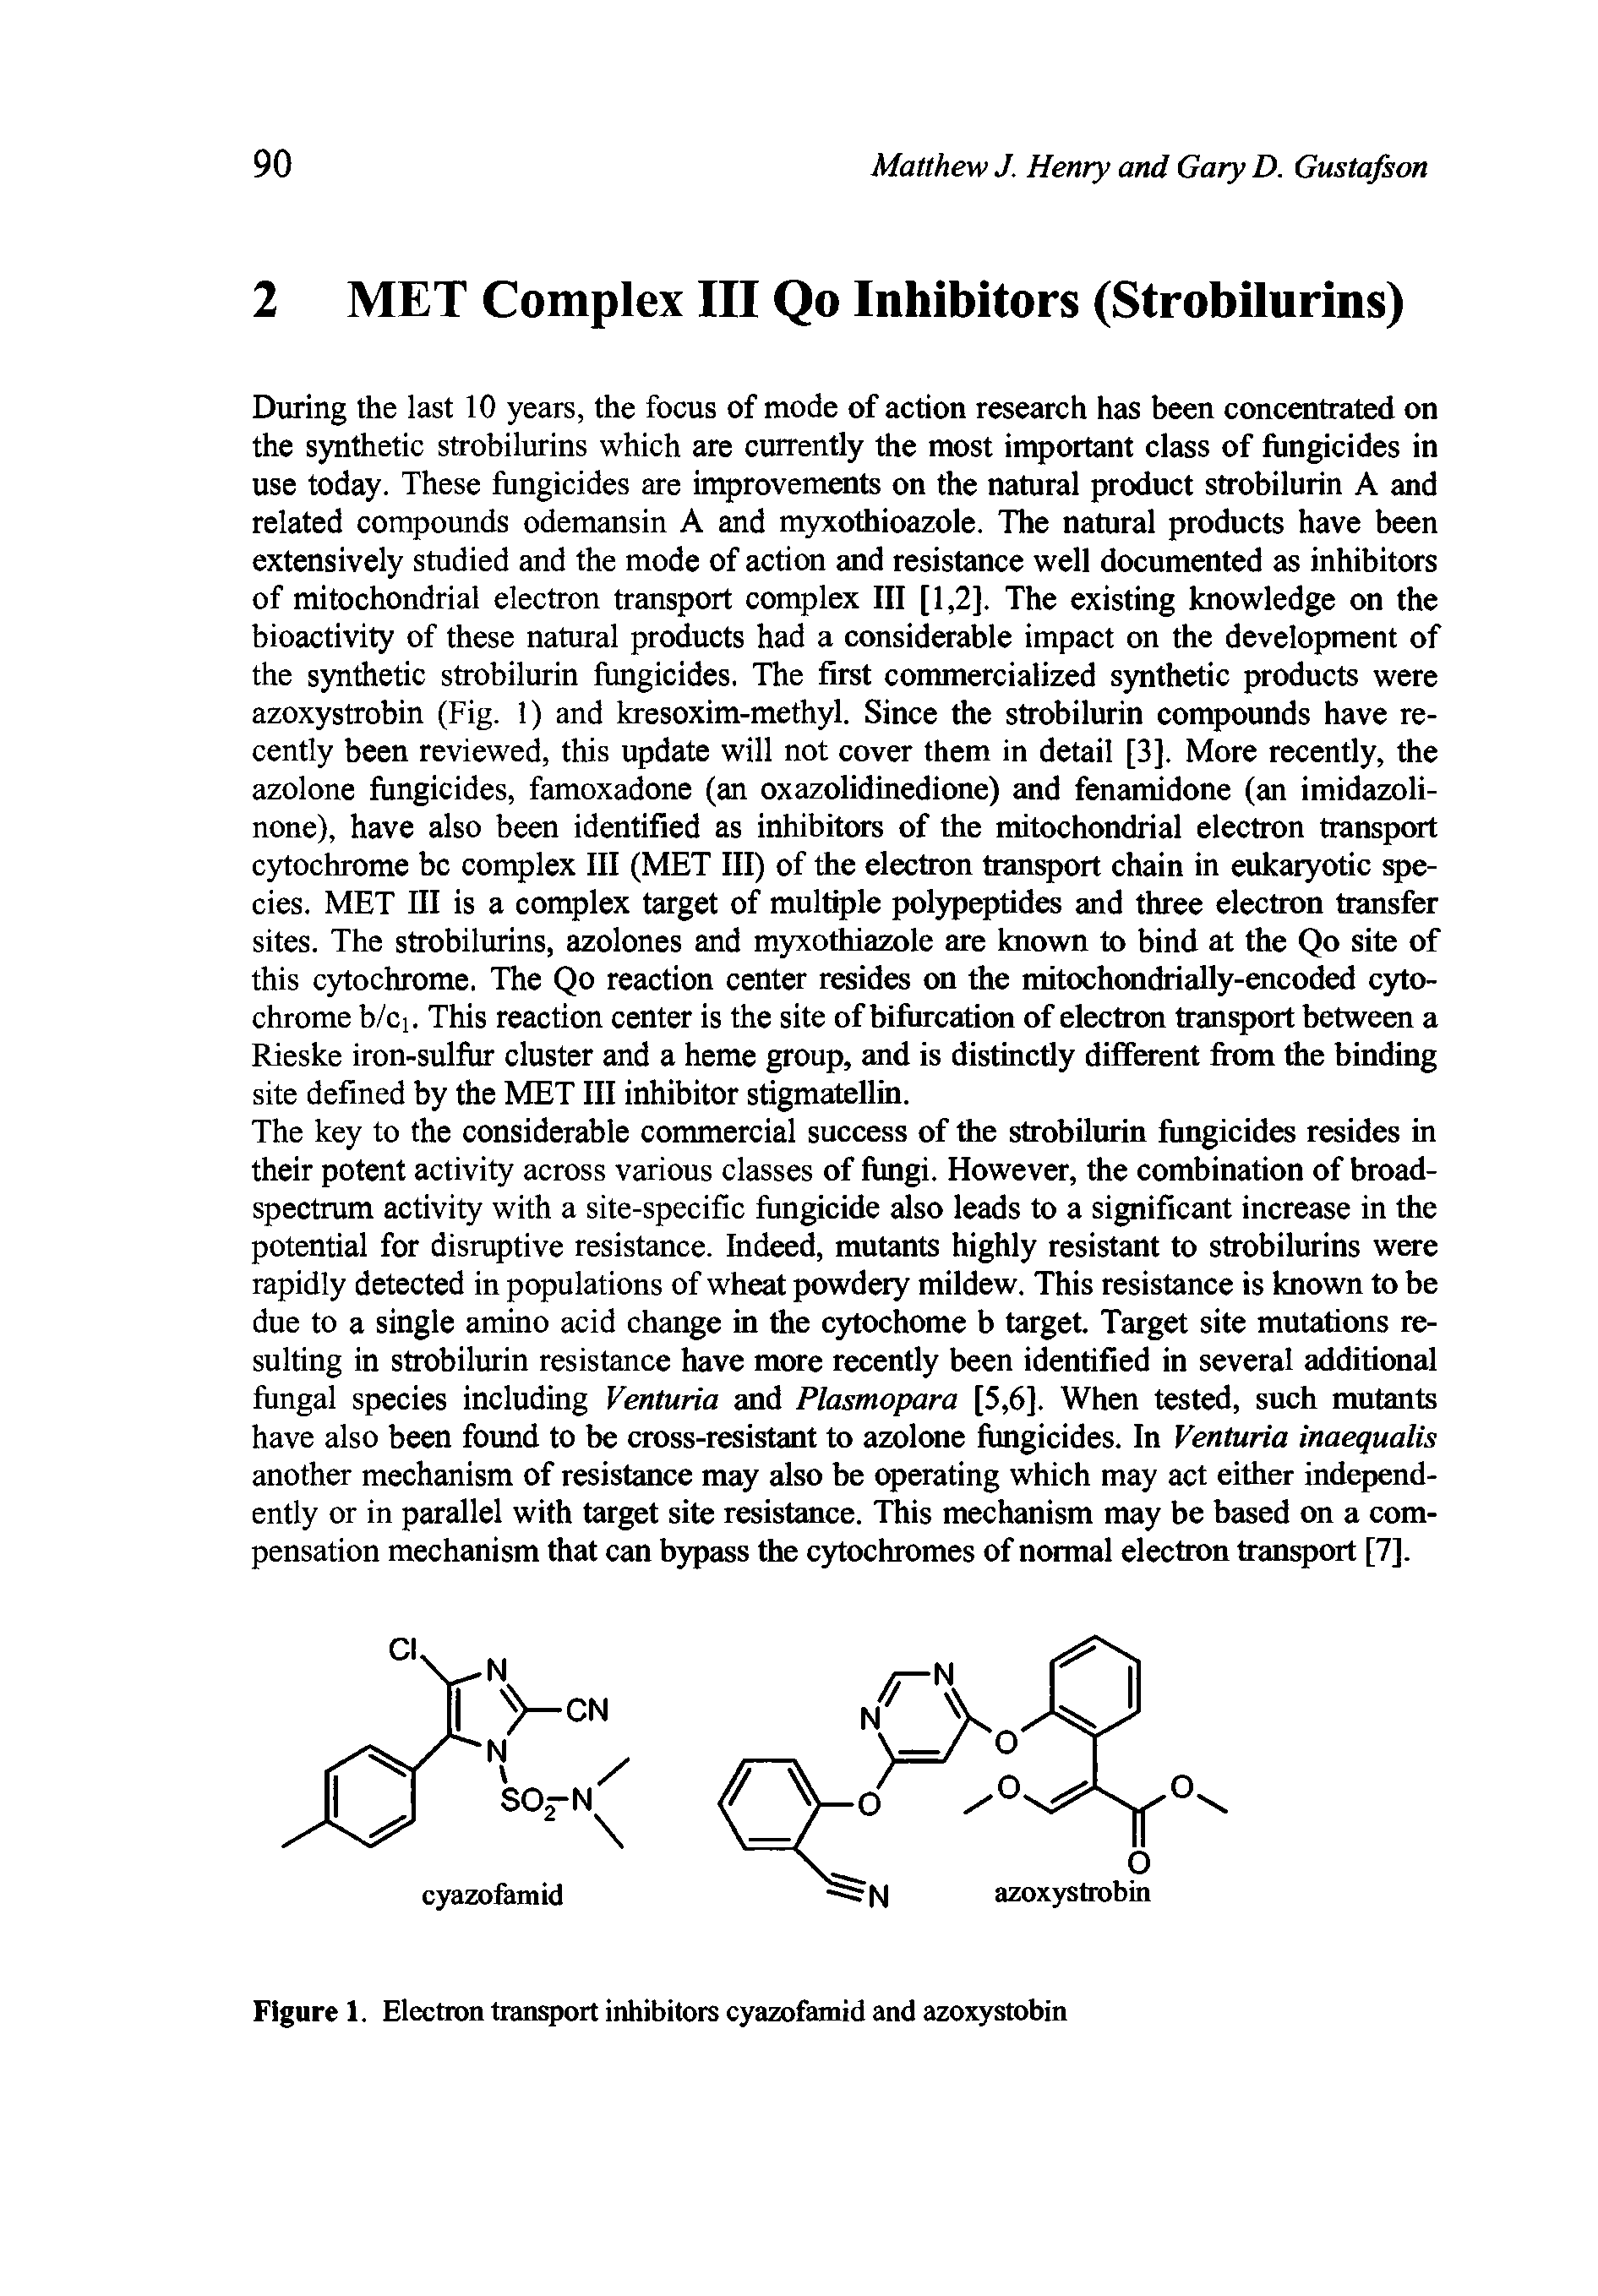 Figure 1. Electron transport inhibitors cyazofamid and azoxystobin...